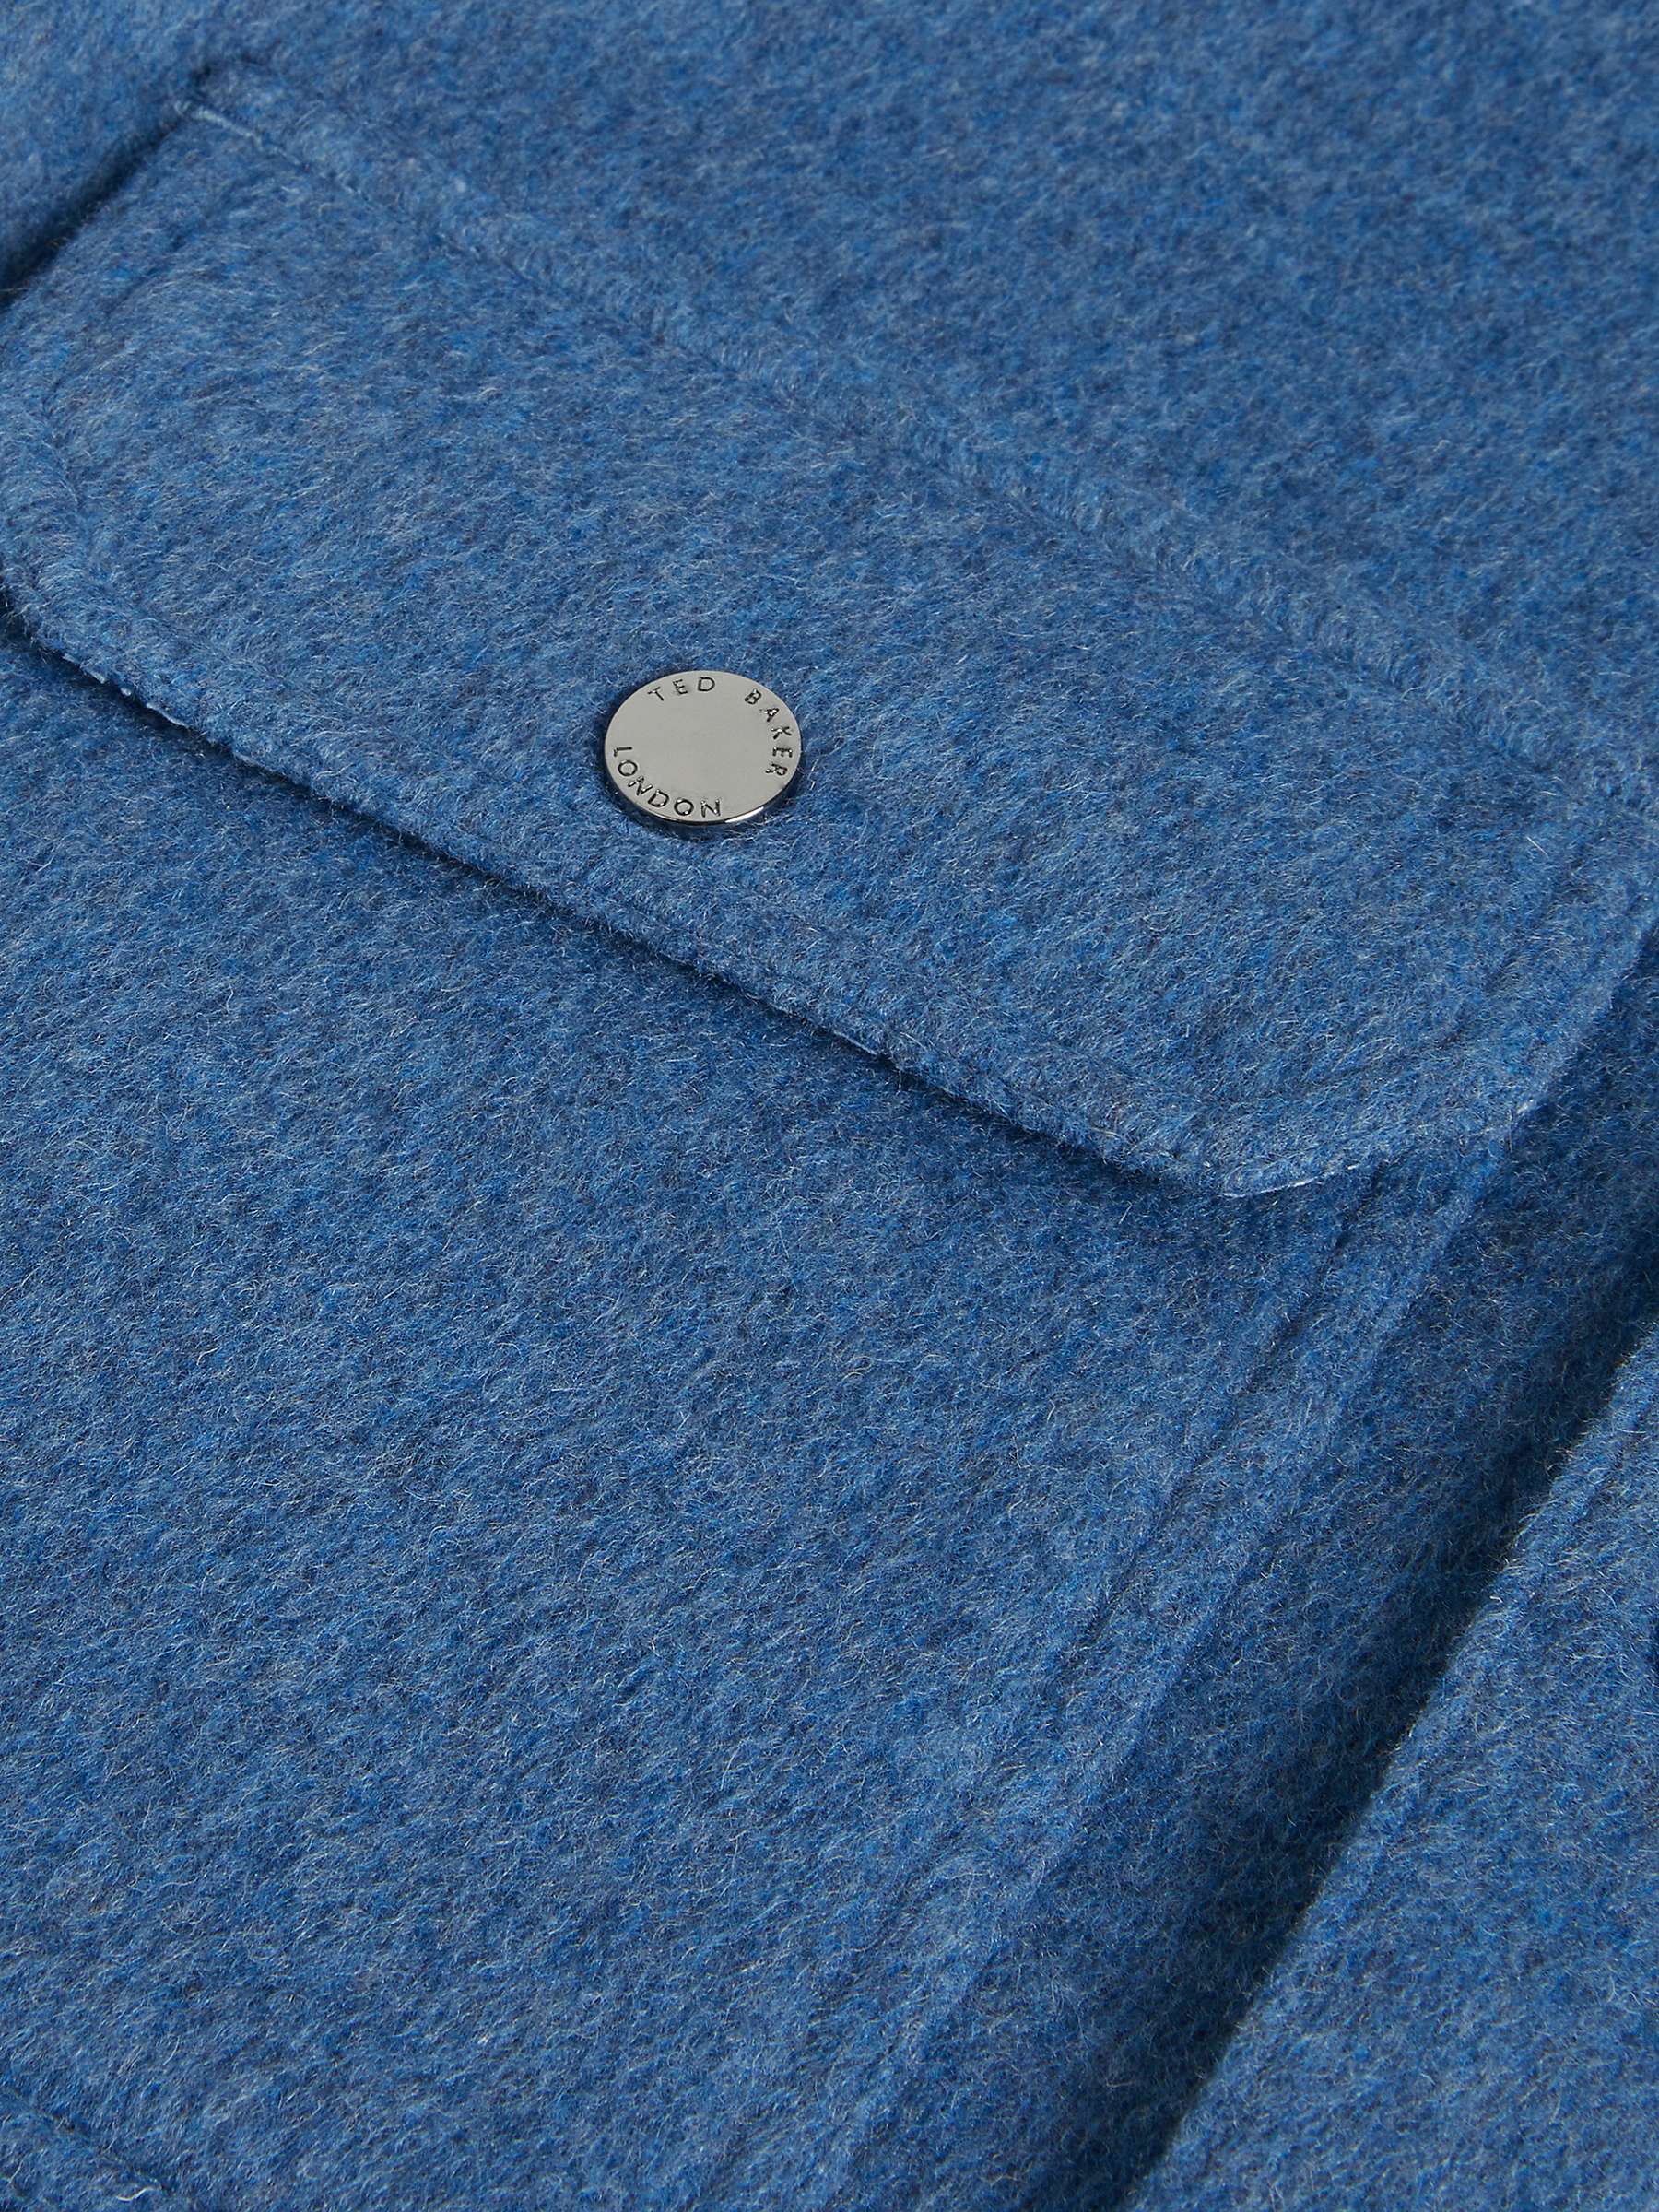 Buy Ted Baker Aderbry Long Sleeve Wool Blend Over Shirt Online at johnlewis.com